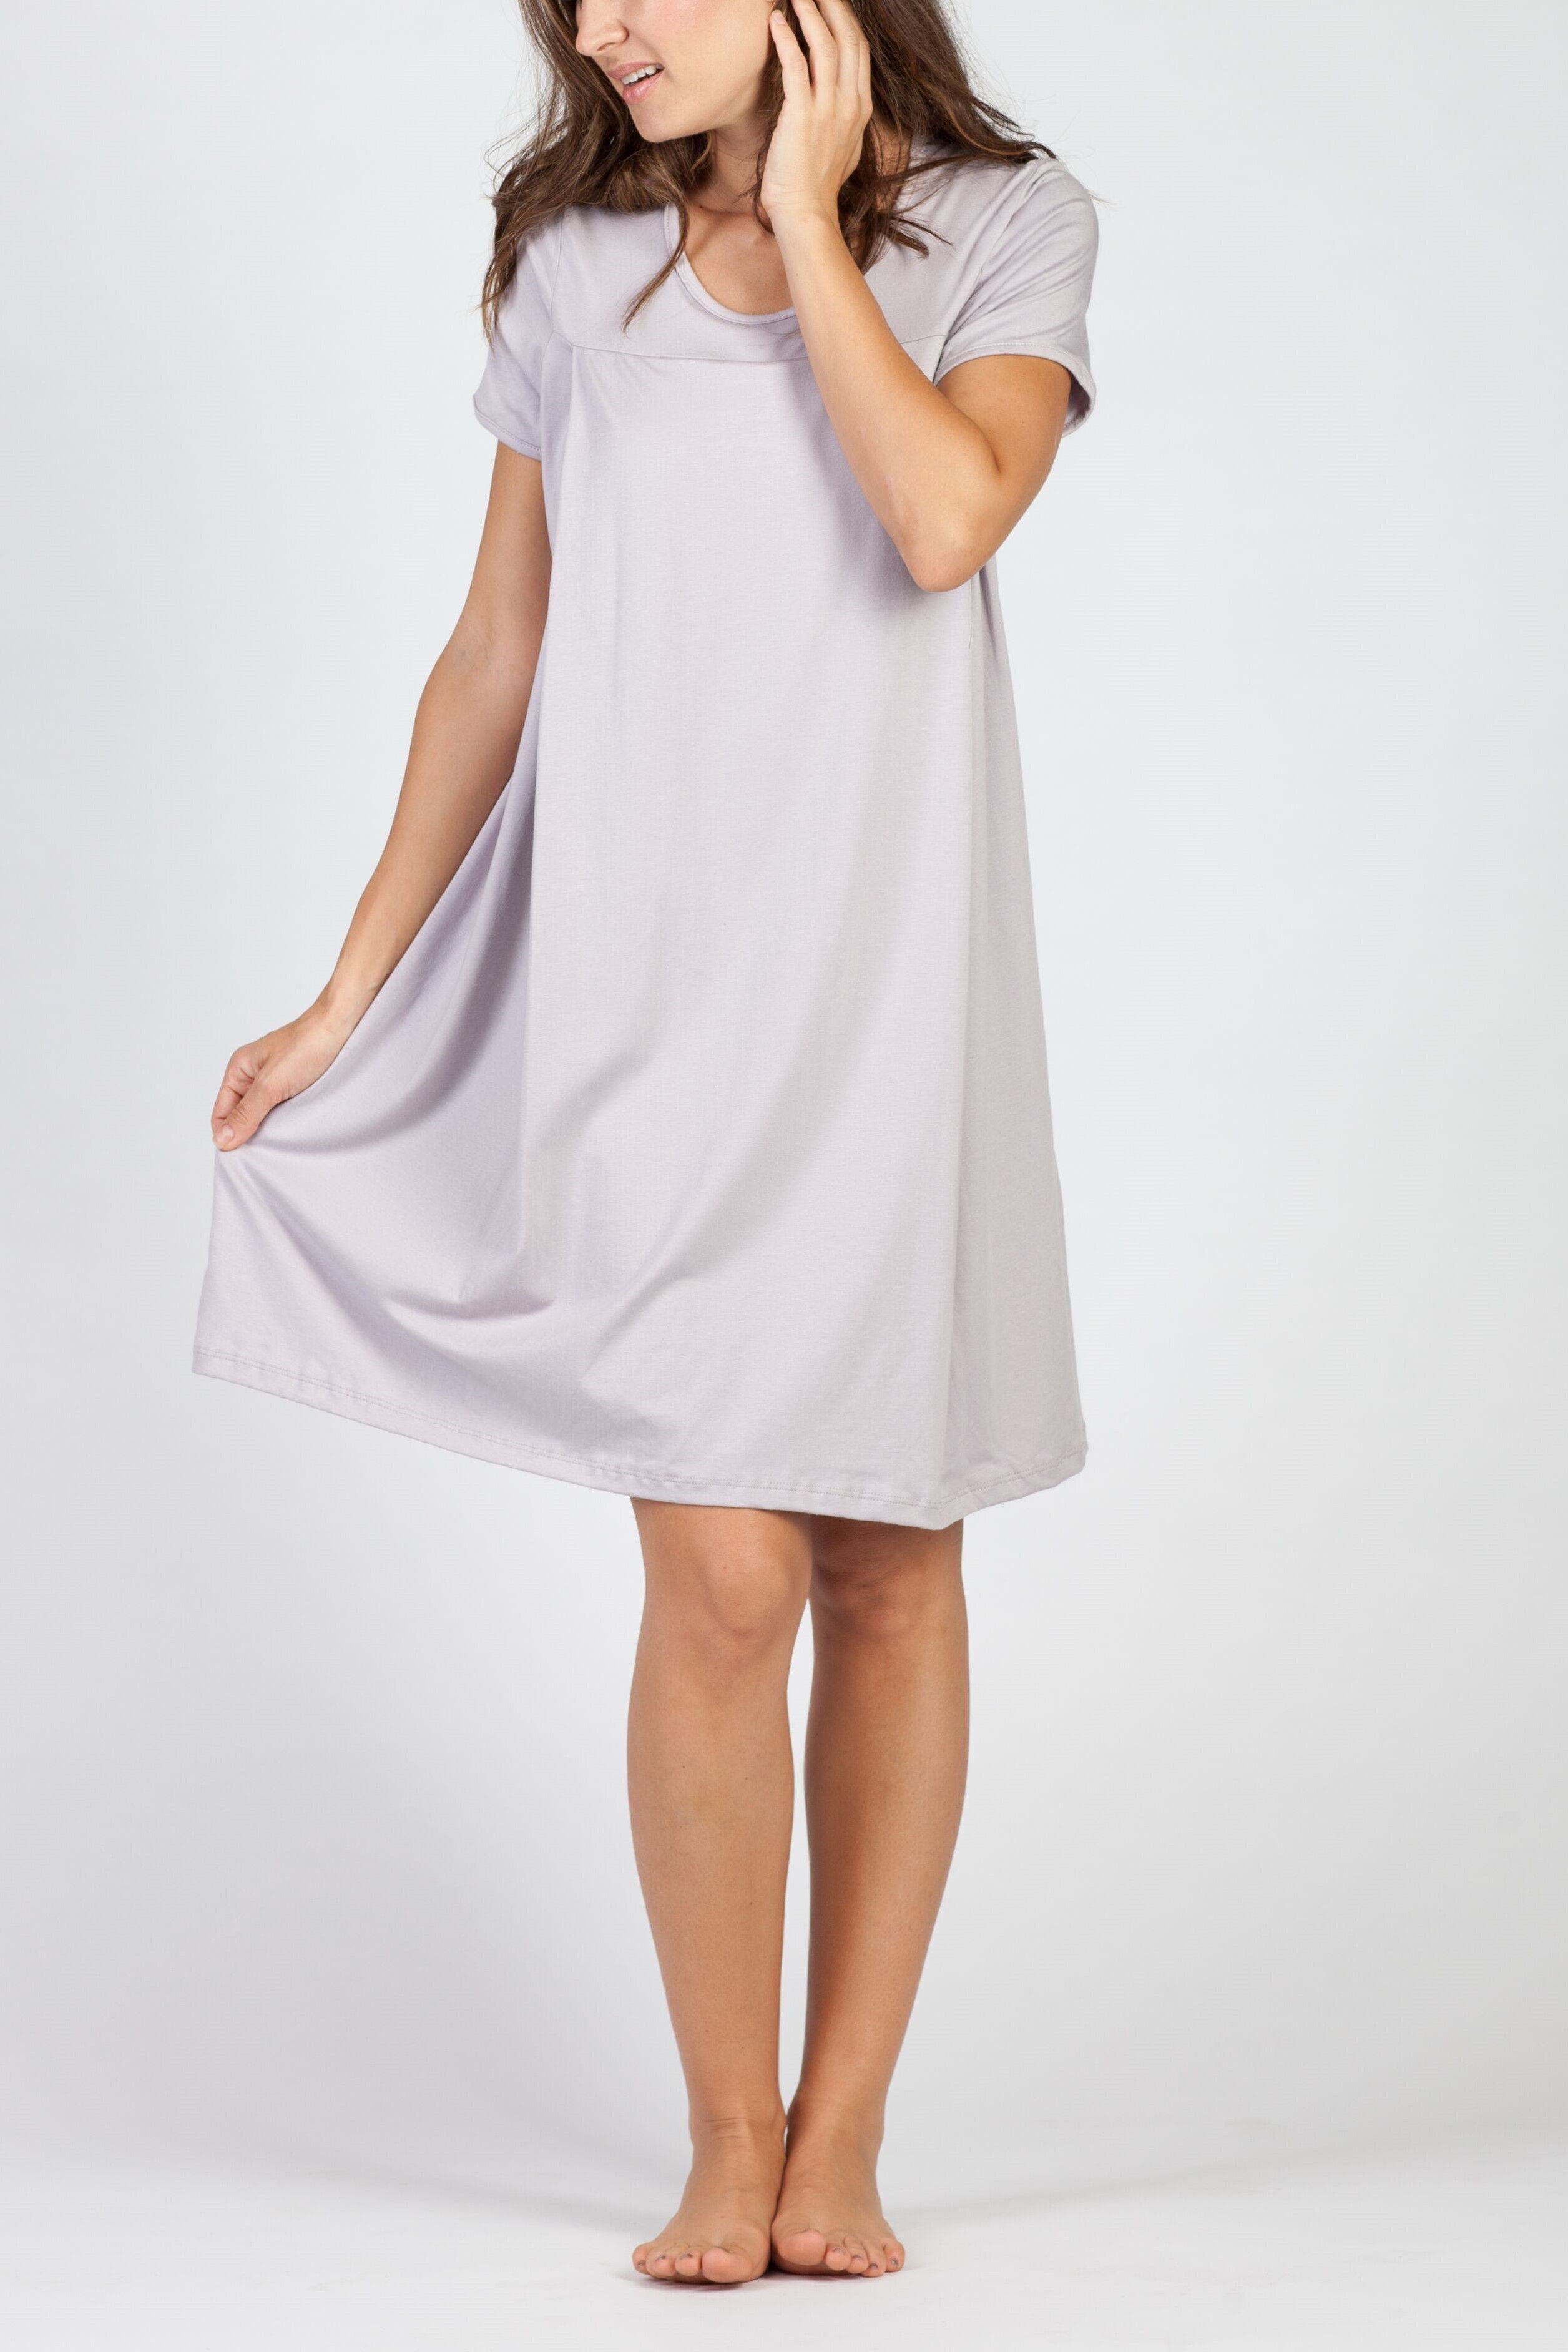 Avidlove Womens Maternity Nursing Cami Dress/Pregnancy Gown/Sleeveless Nightshirt S-XXL